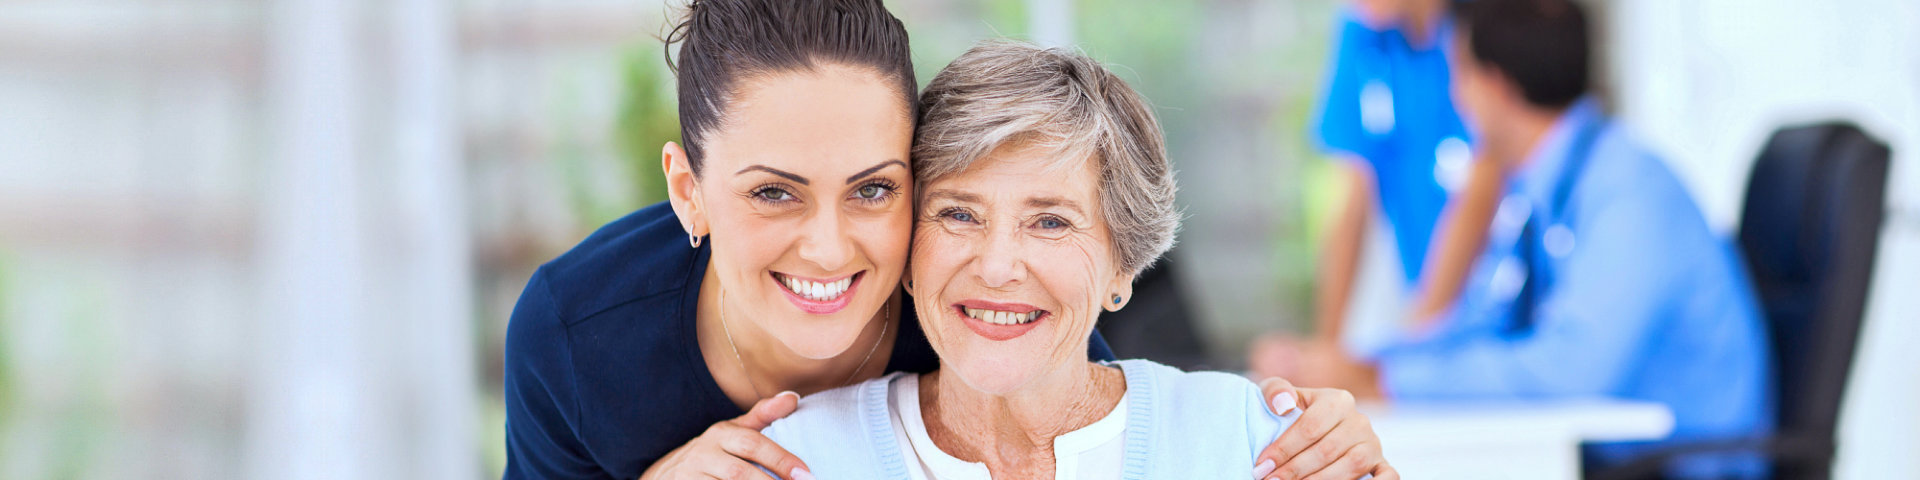 caregiver accompanying senior woman